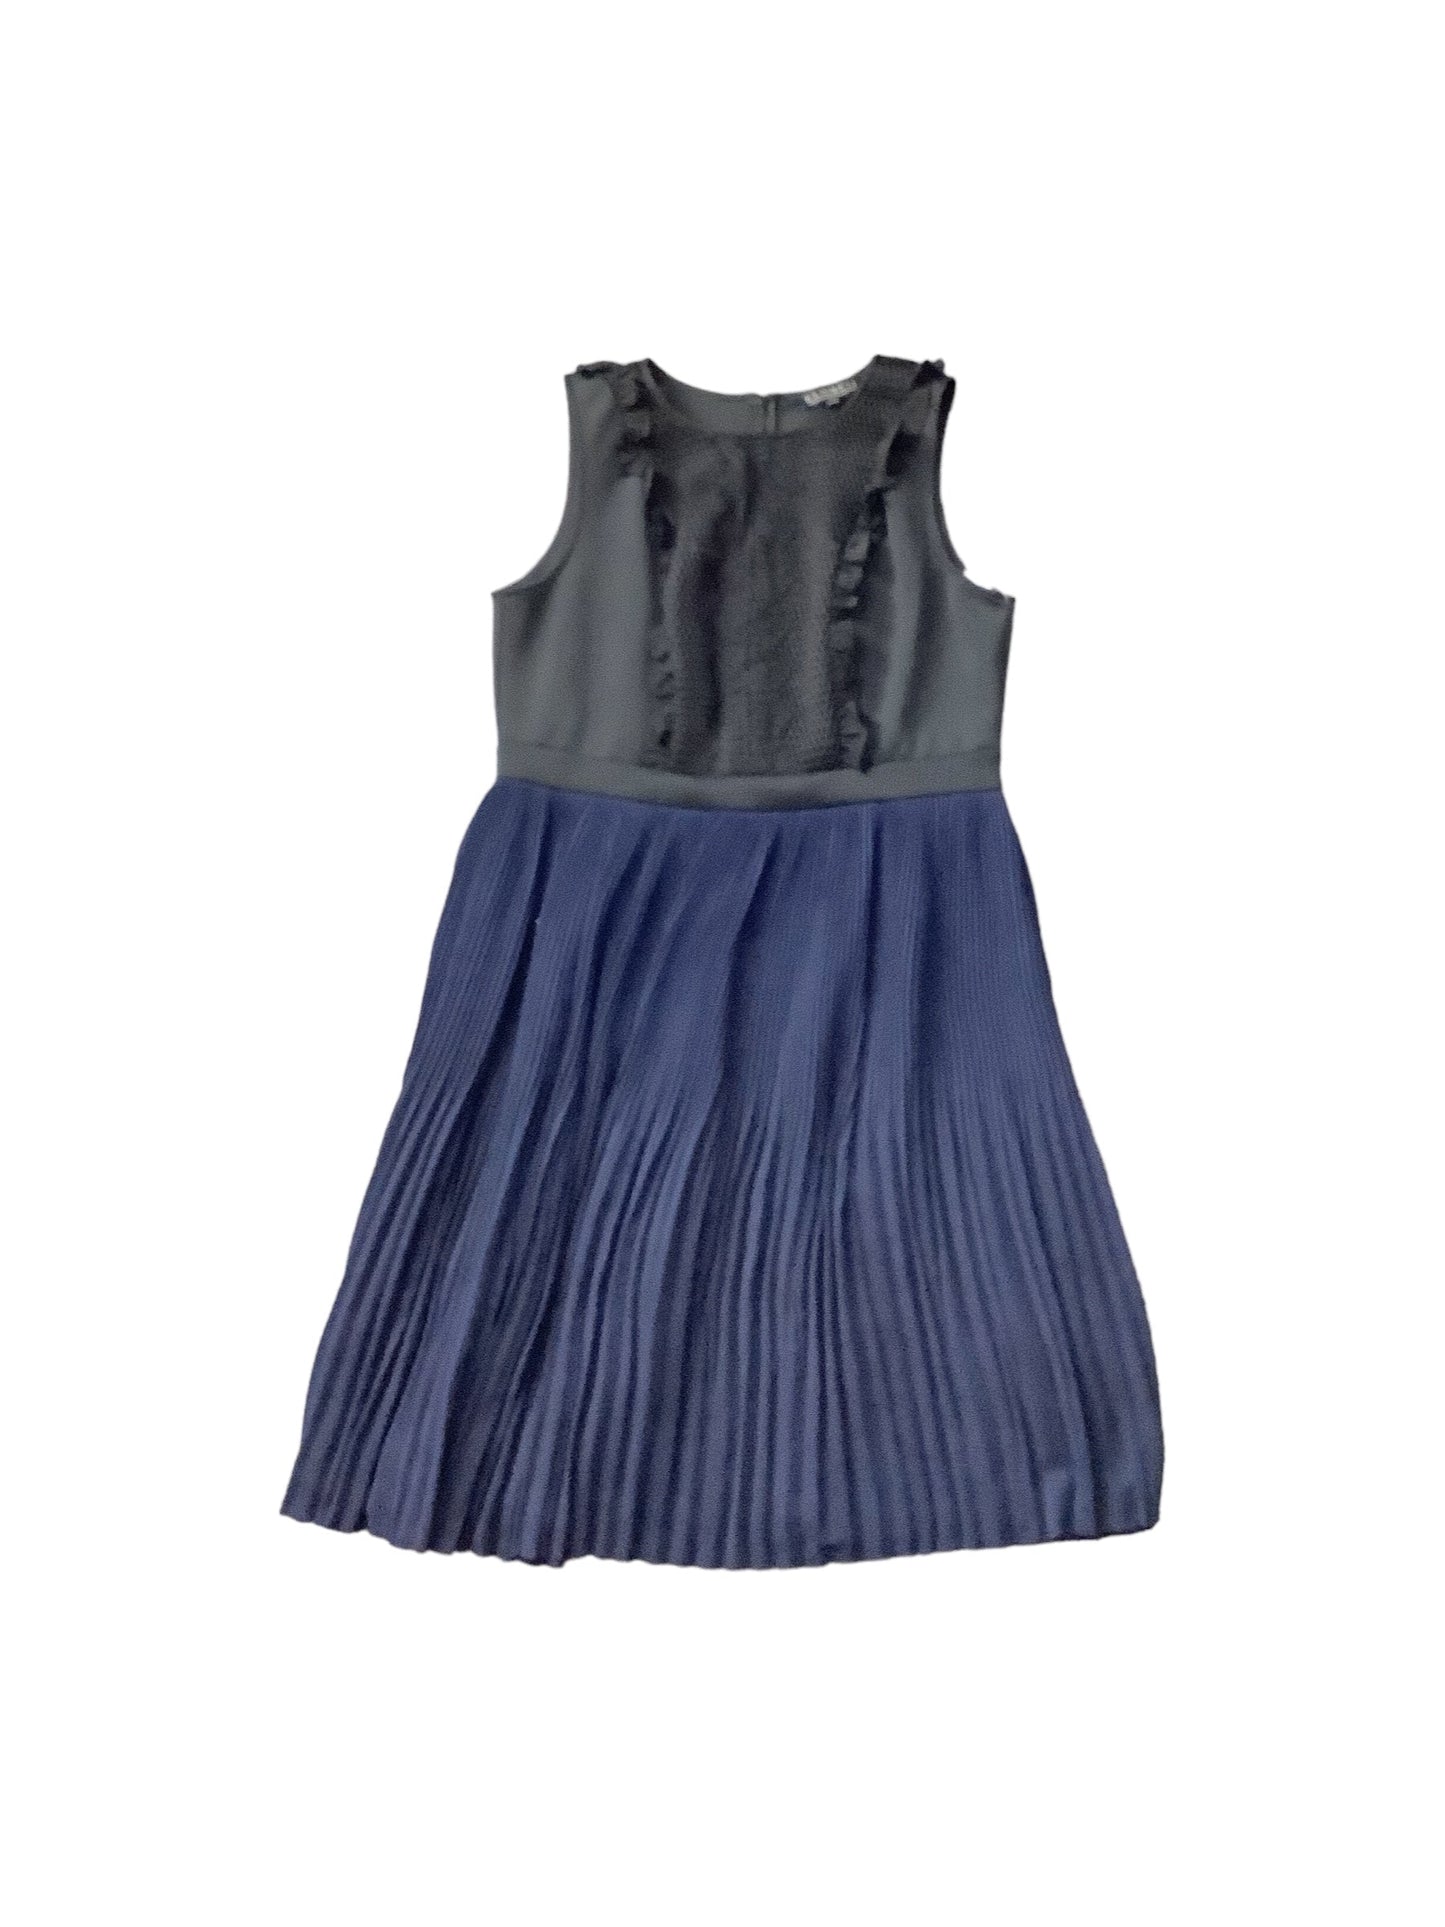 Black & Blue Dress Casual Midi Eloquii, Size 14